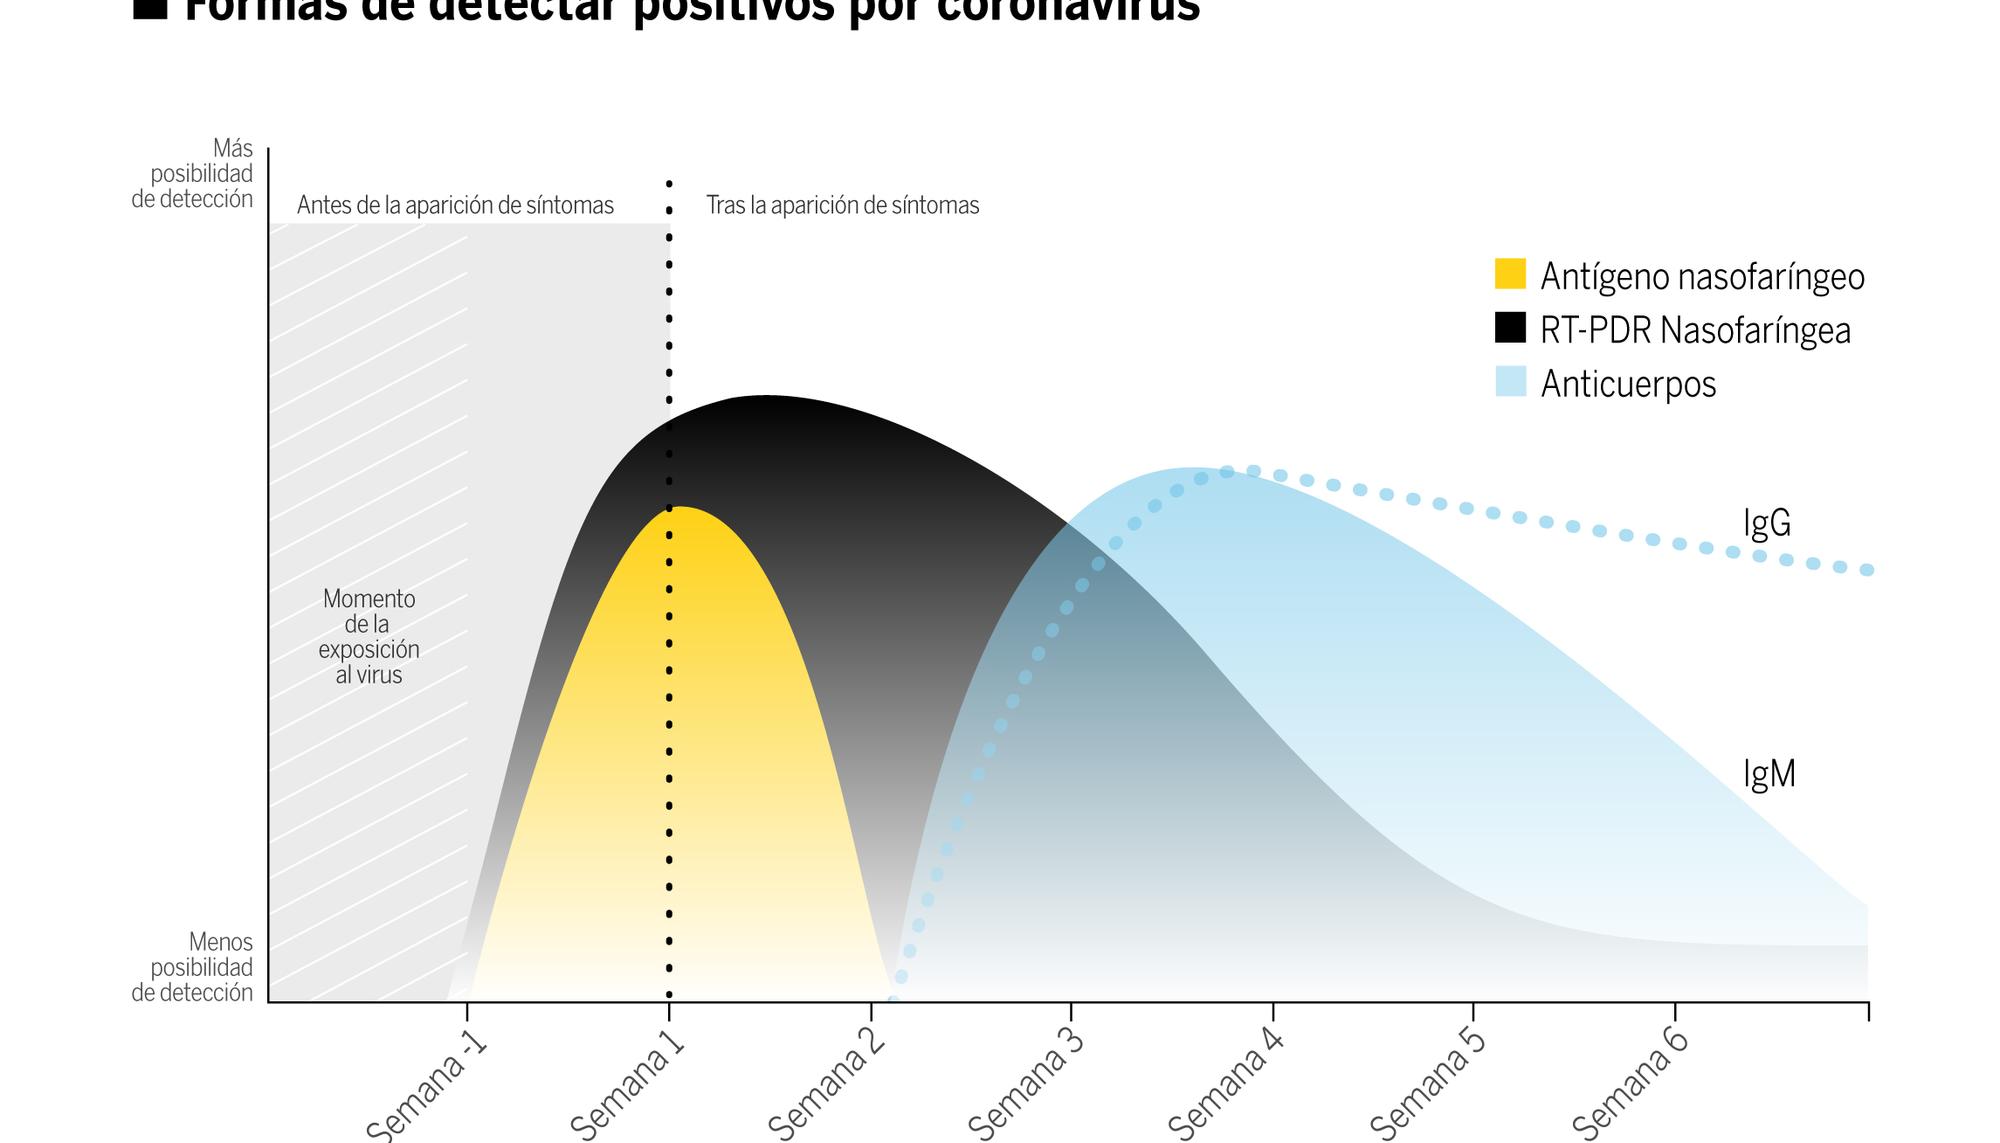 gráfico Formas de detectar positivos por coronavirus